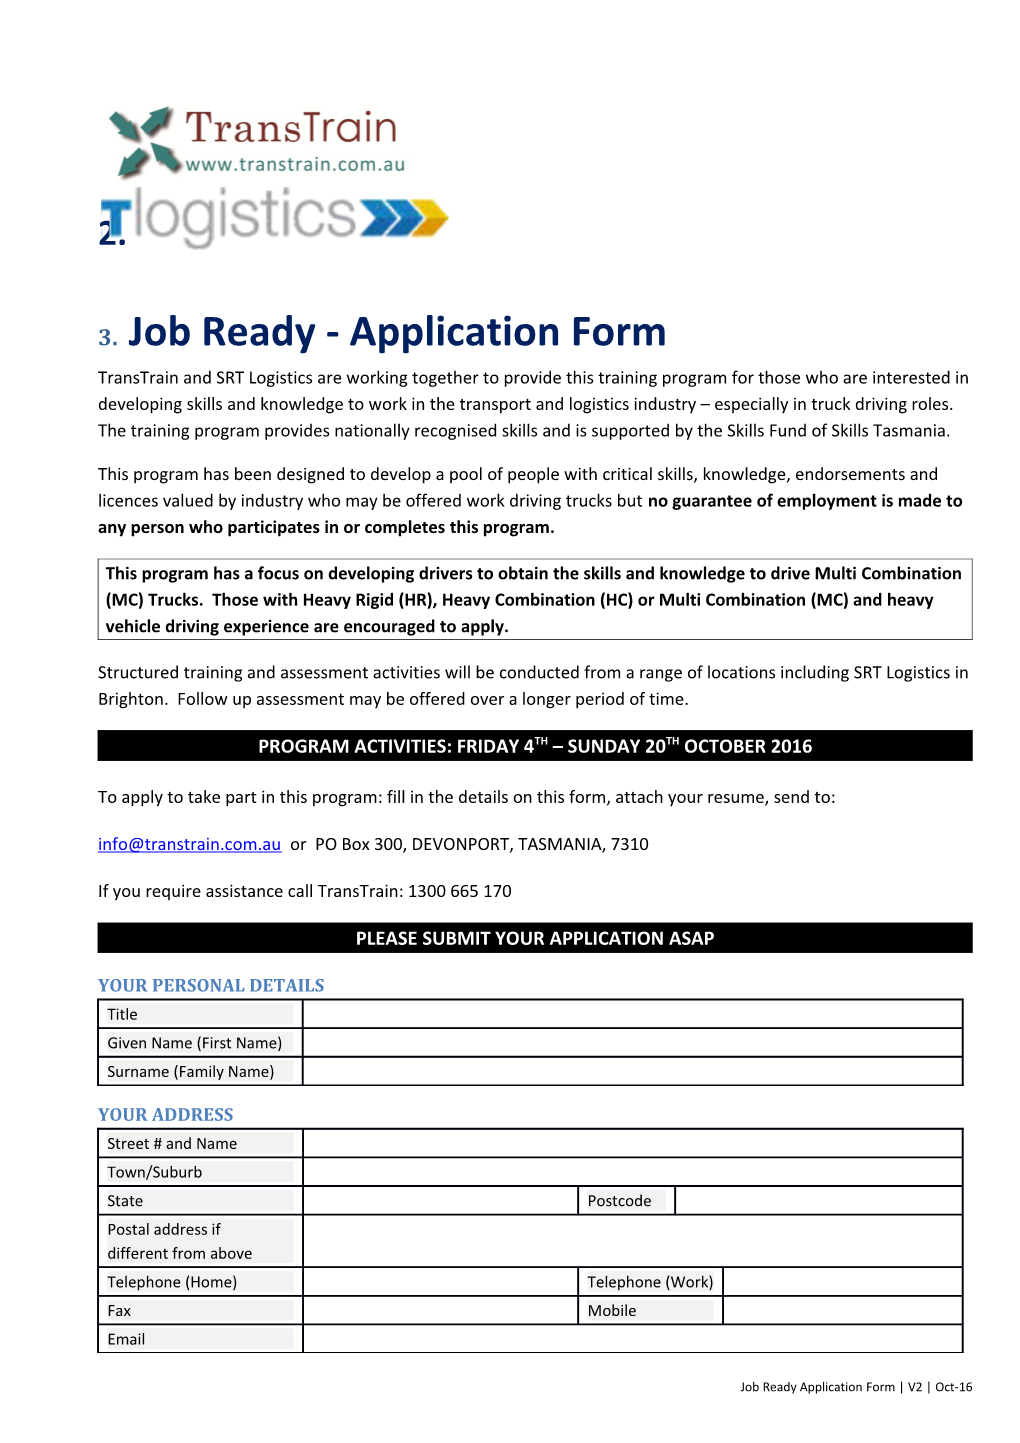 Job Ready - Application Form